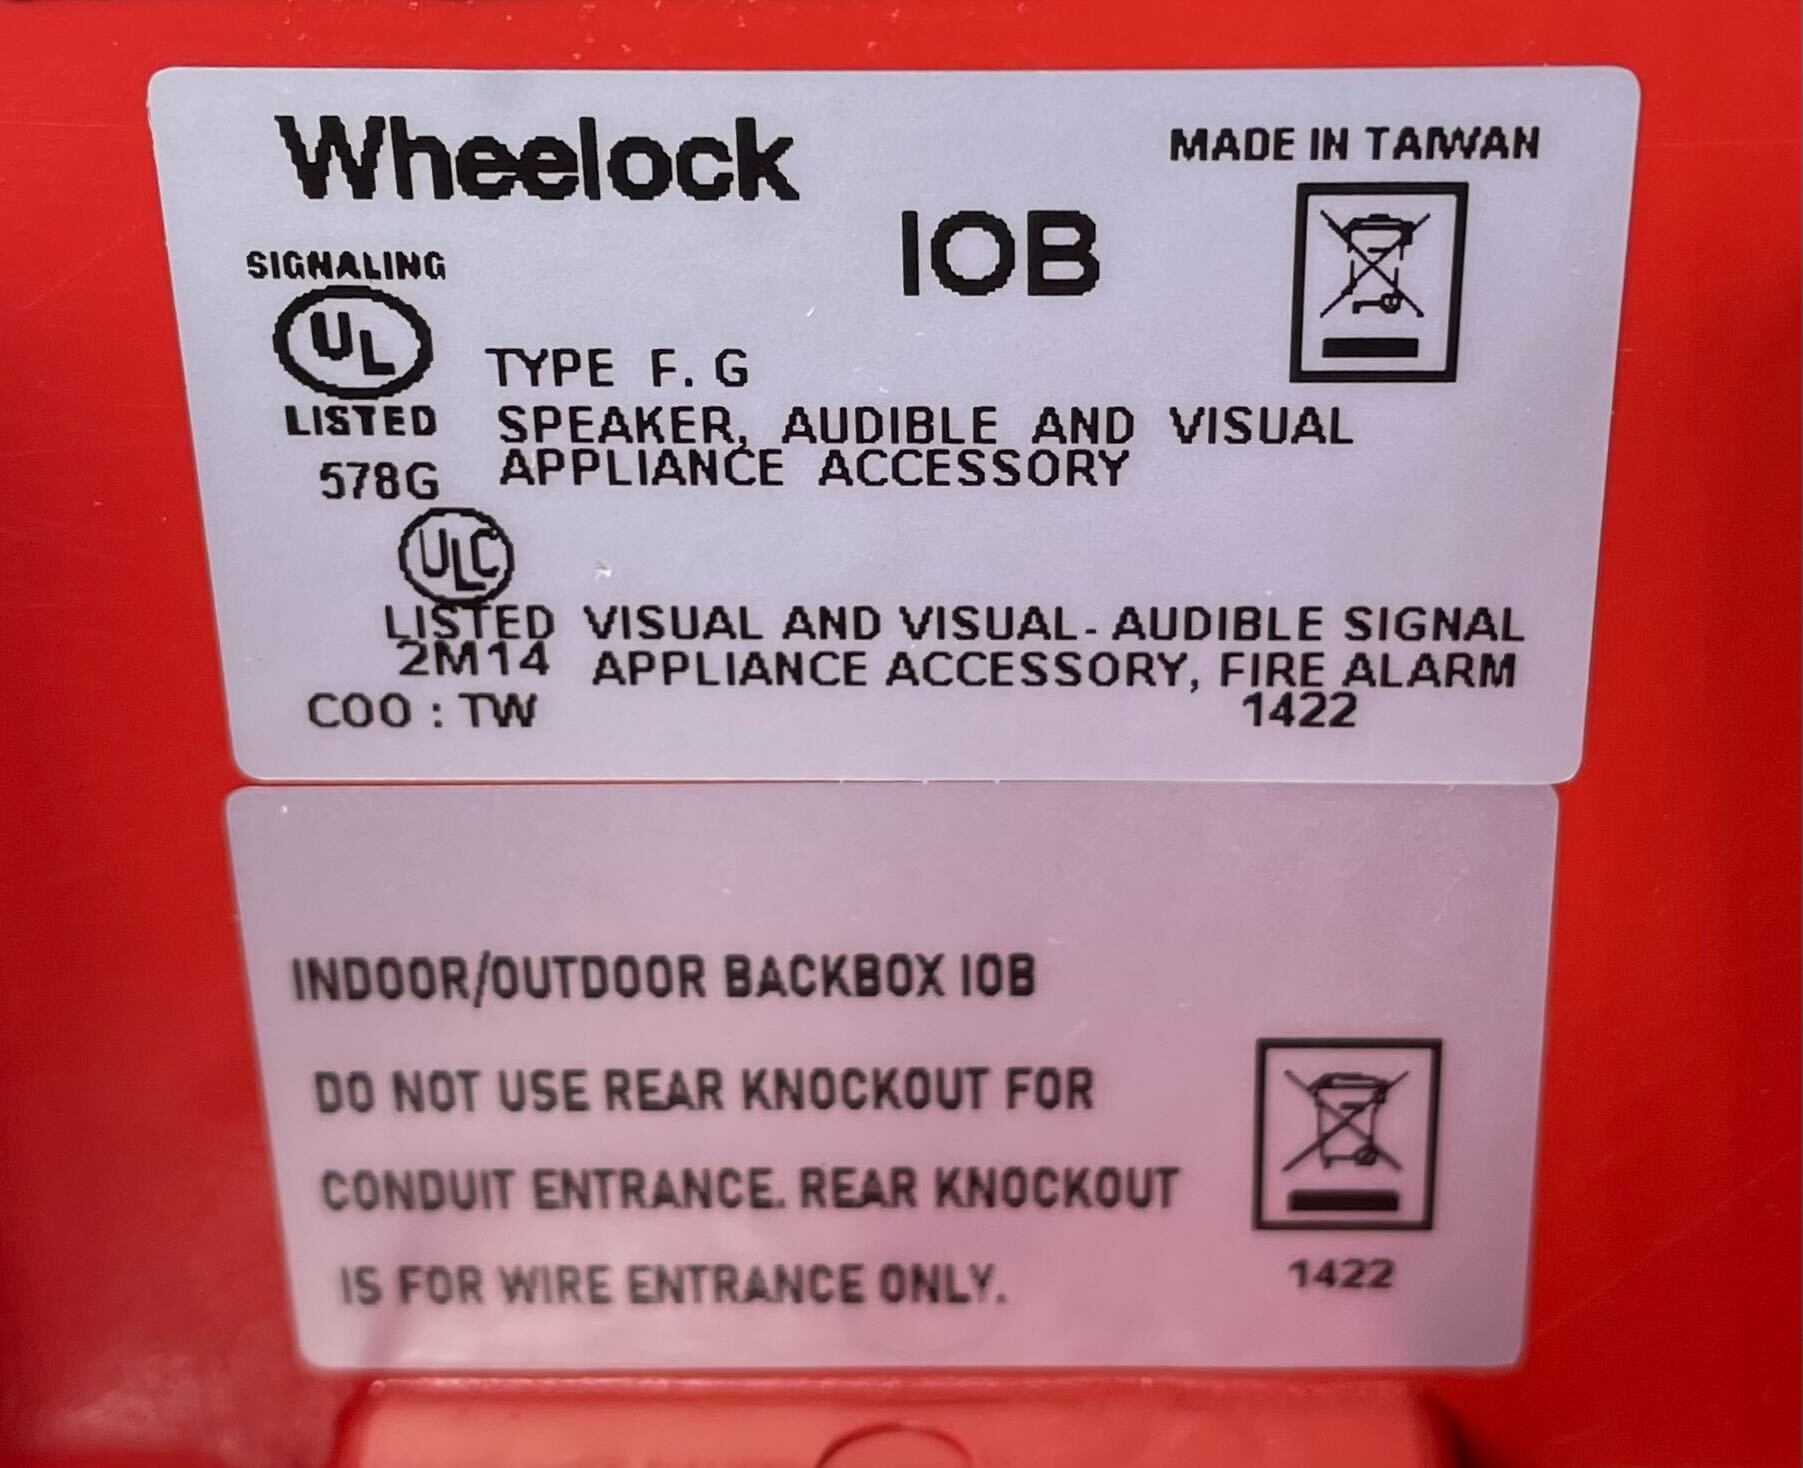 Wheelock ET70WP-2475C-FR KIT - The Fire Alarm Supplier